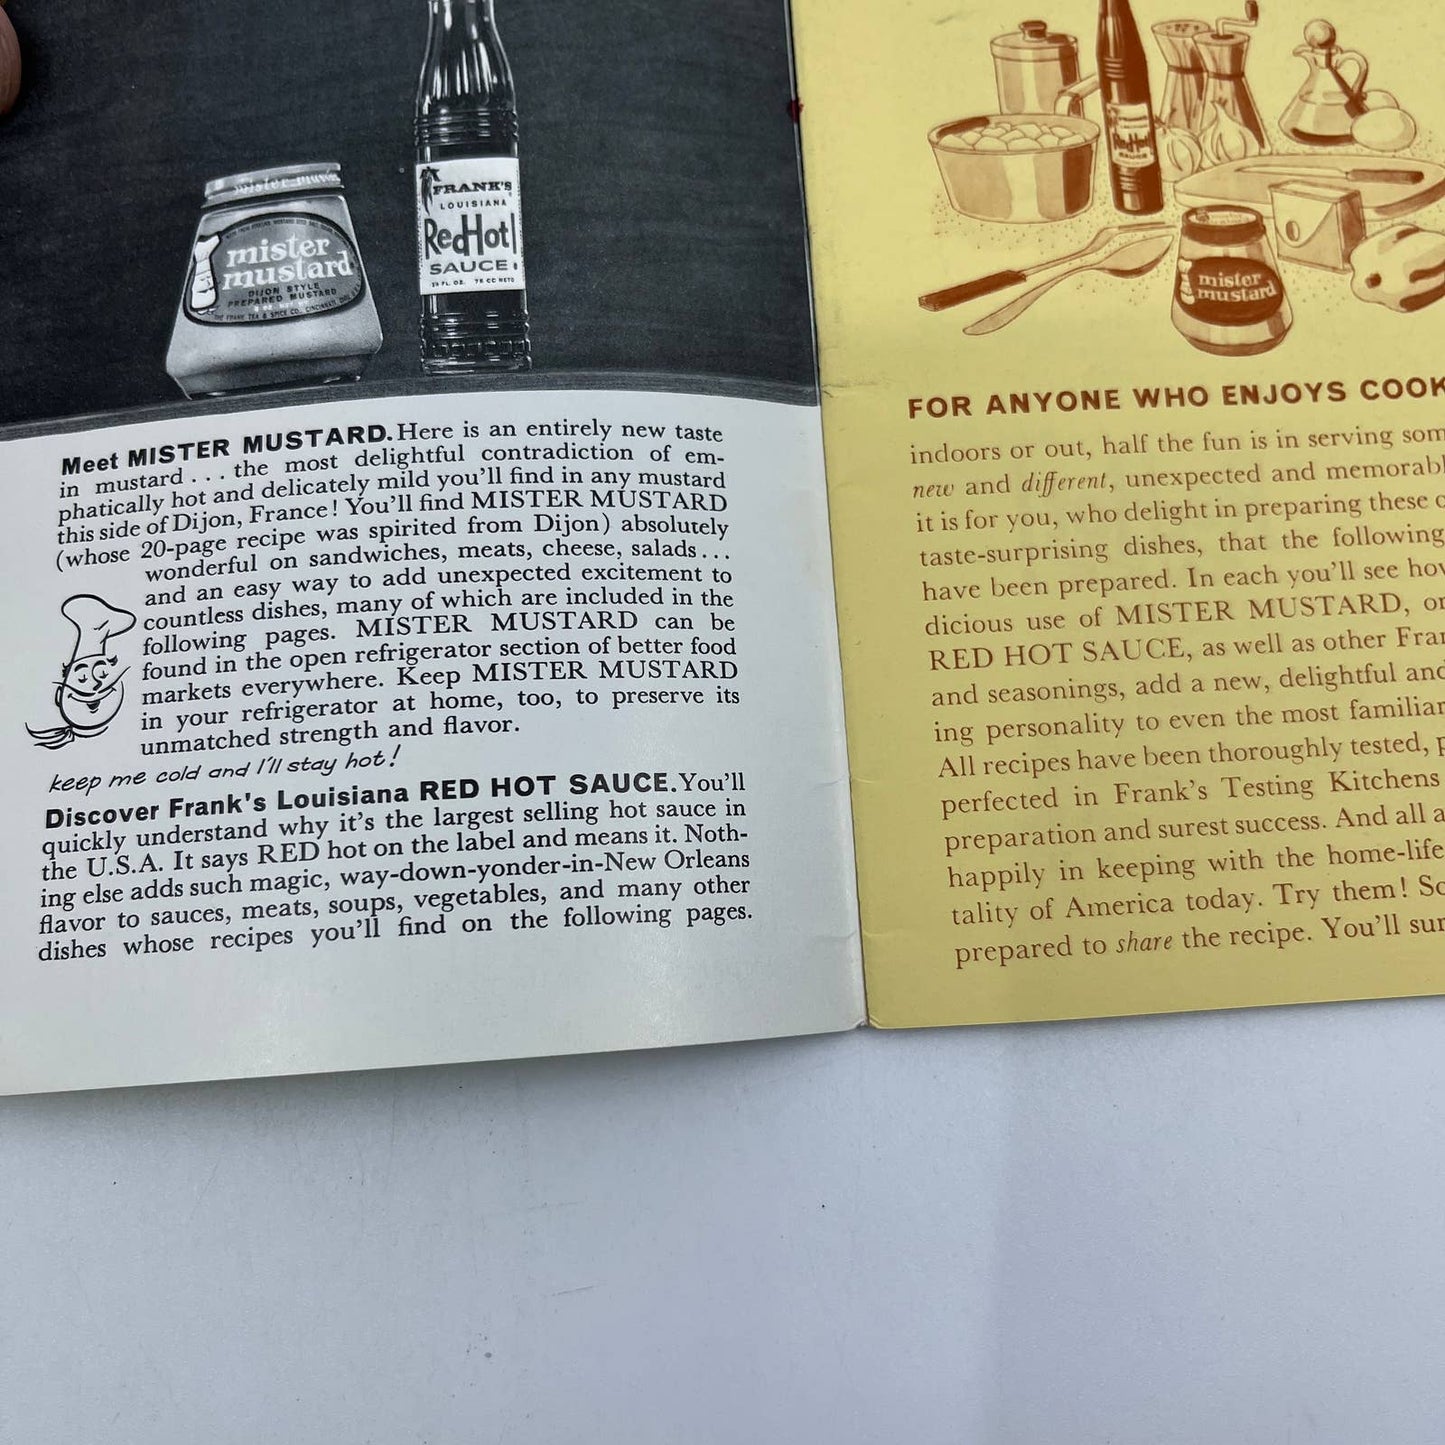 1950s Frank's 50 Good 'n Zesty Recipes Cookbook Mister Mustard Red Hot TG6